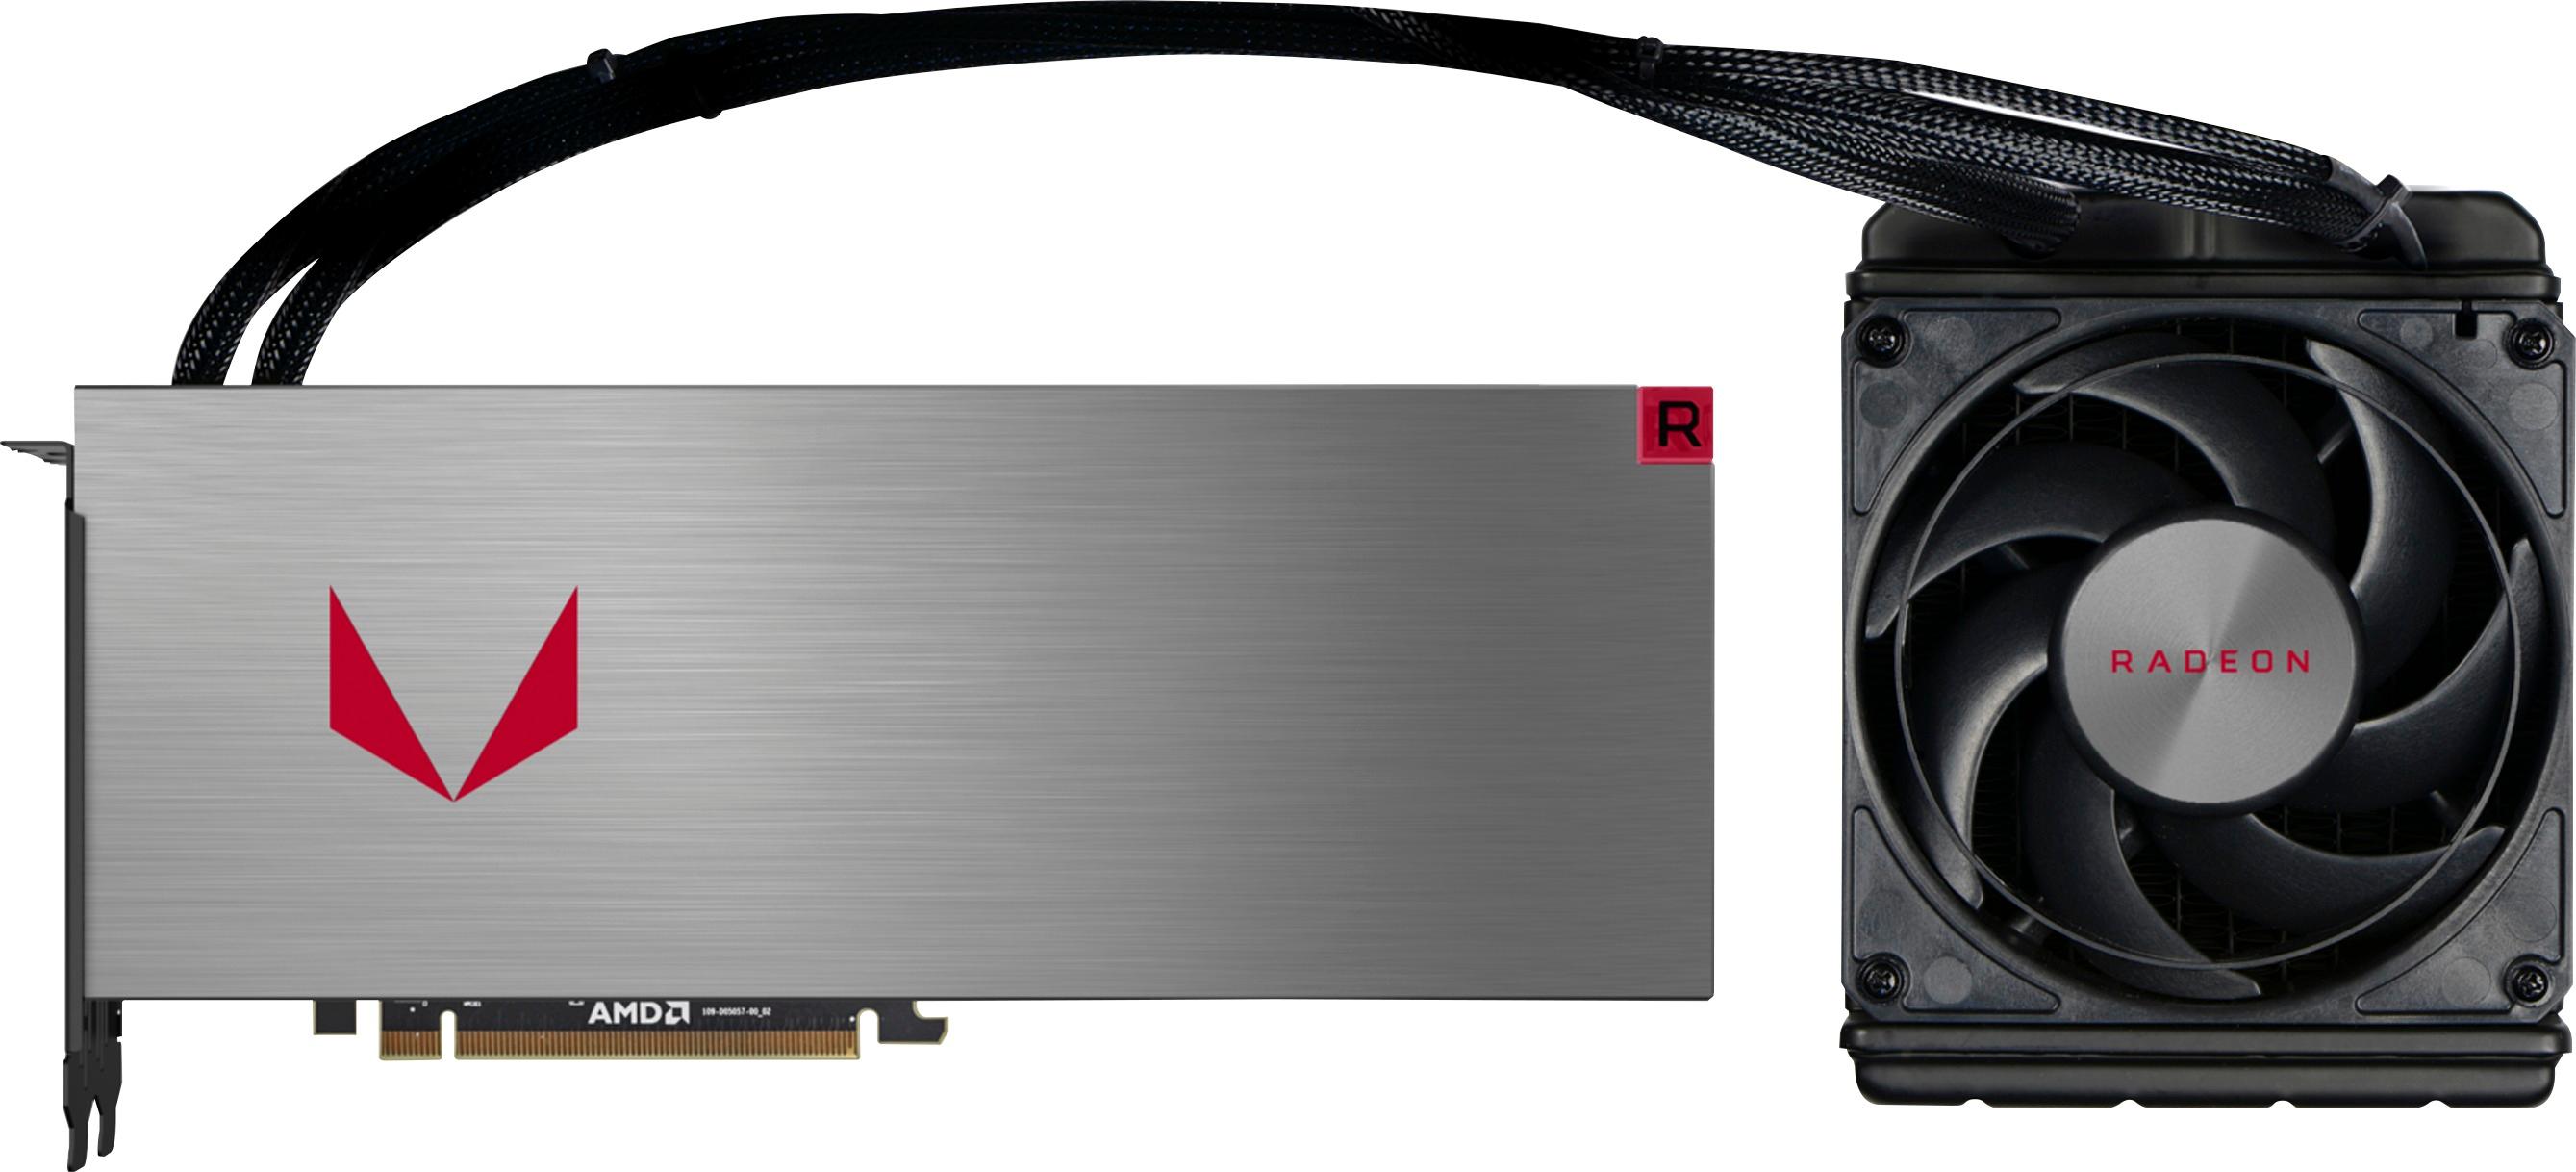 XFX AMD Radeon RX Vega 64 8GB HBM2 PCI Express - Best Buy